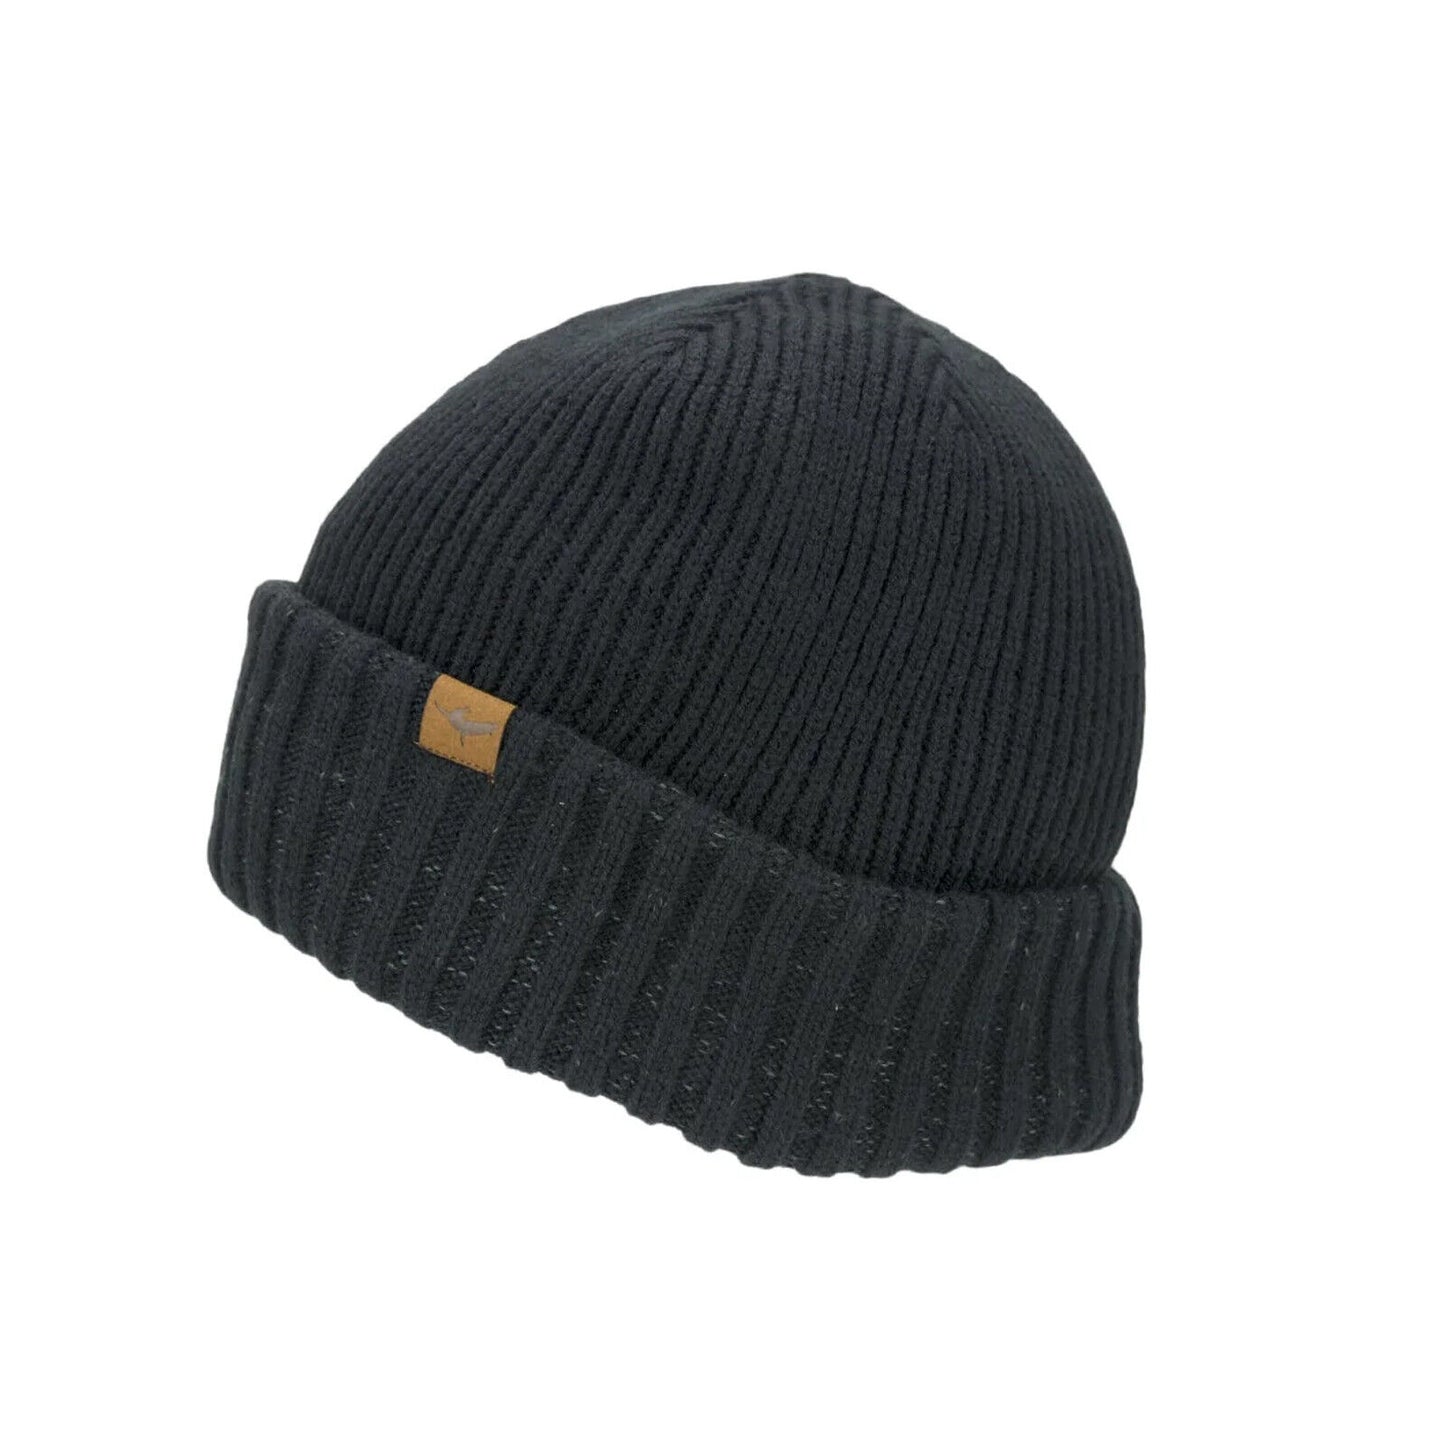 SealSkinz Waterproof Cold Weather Hat Black